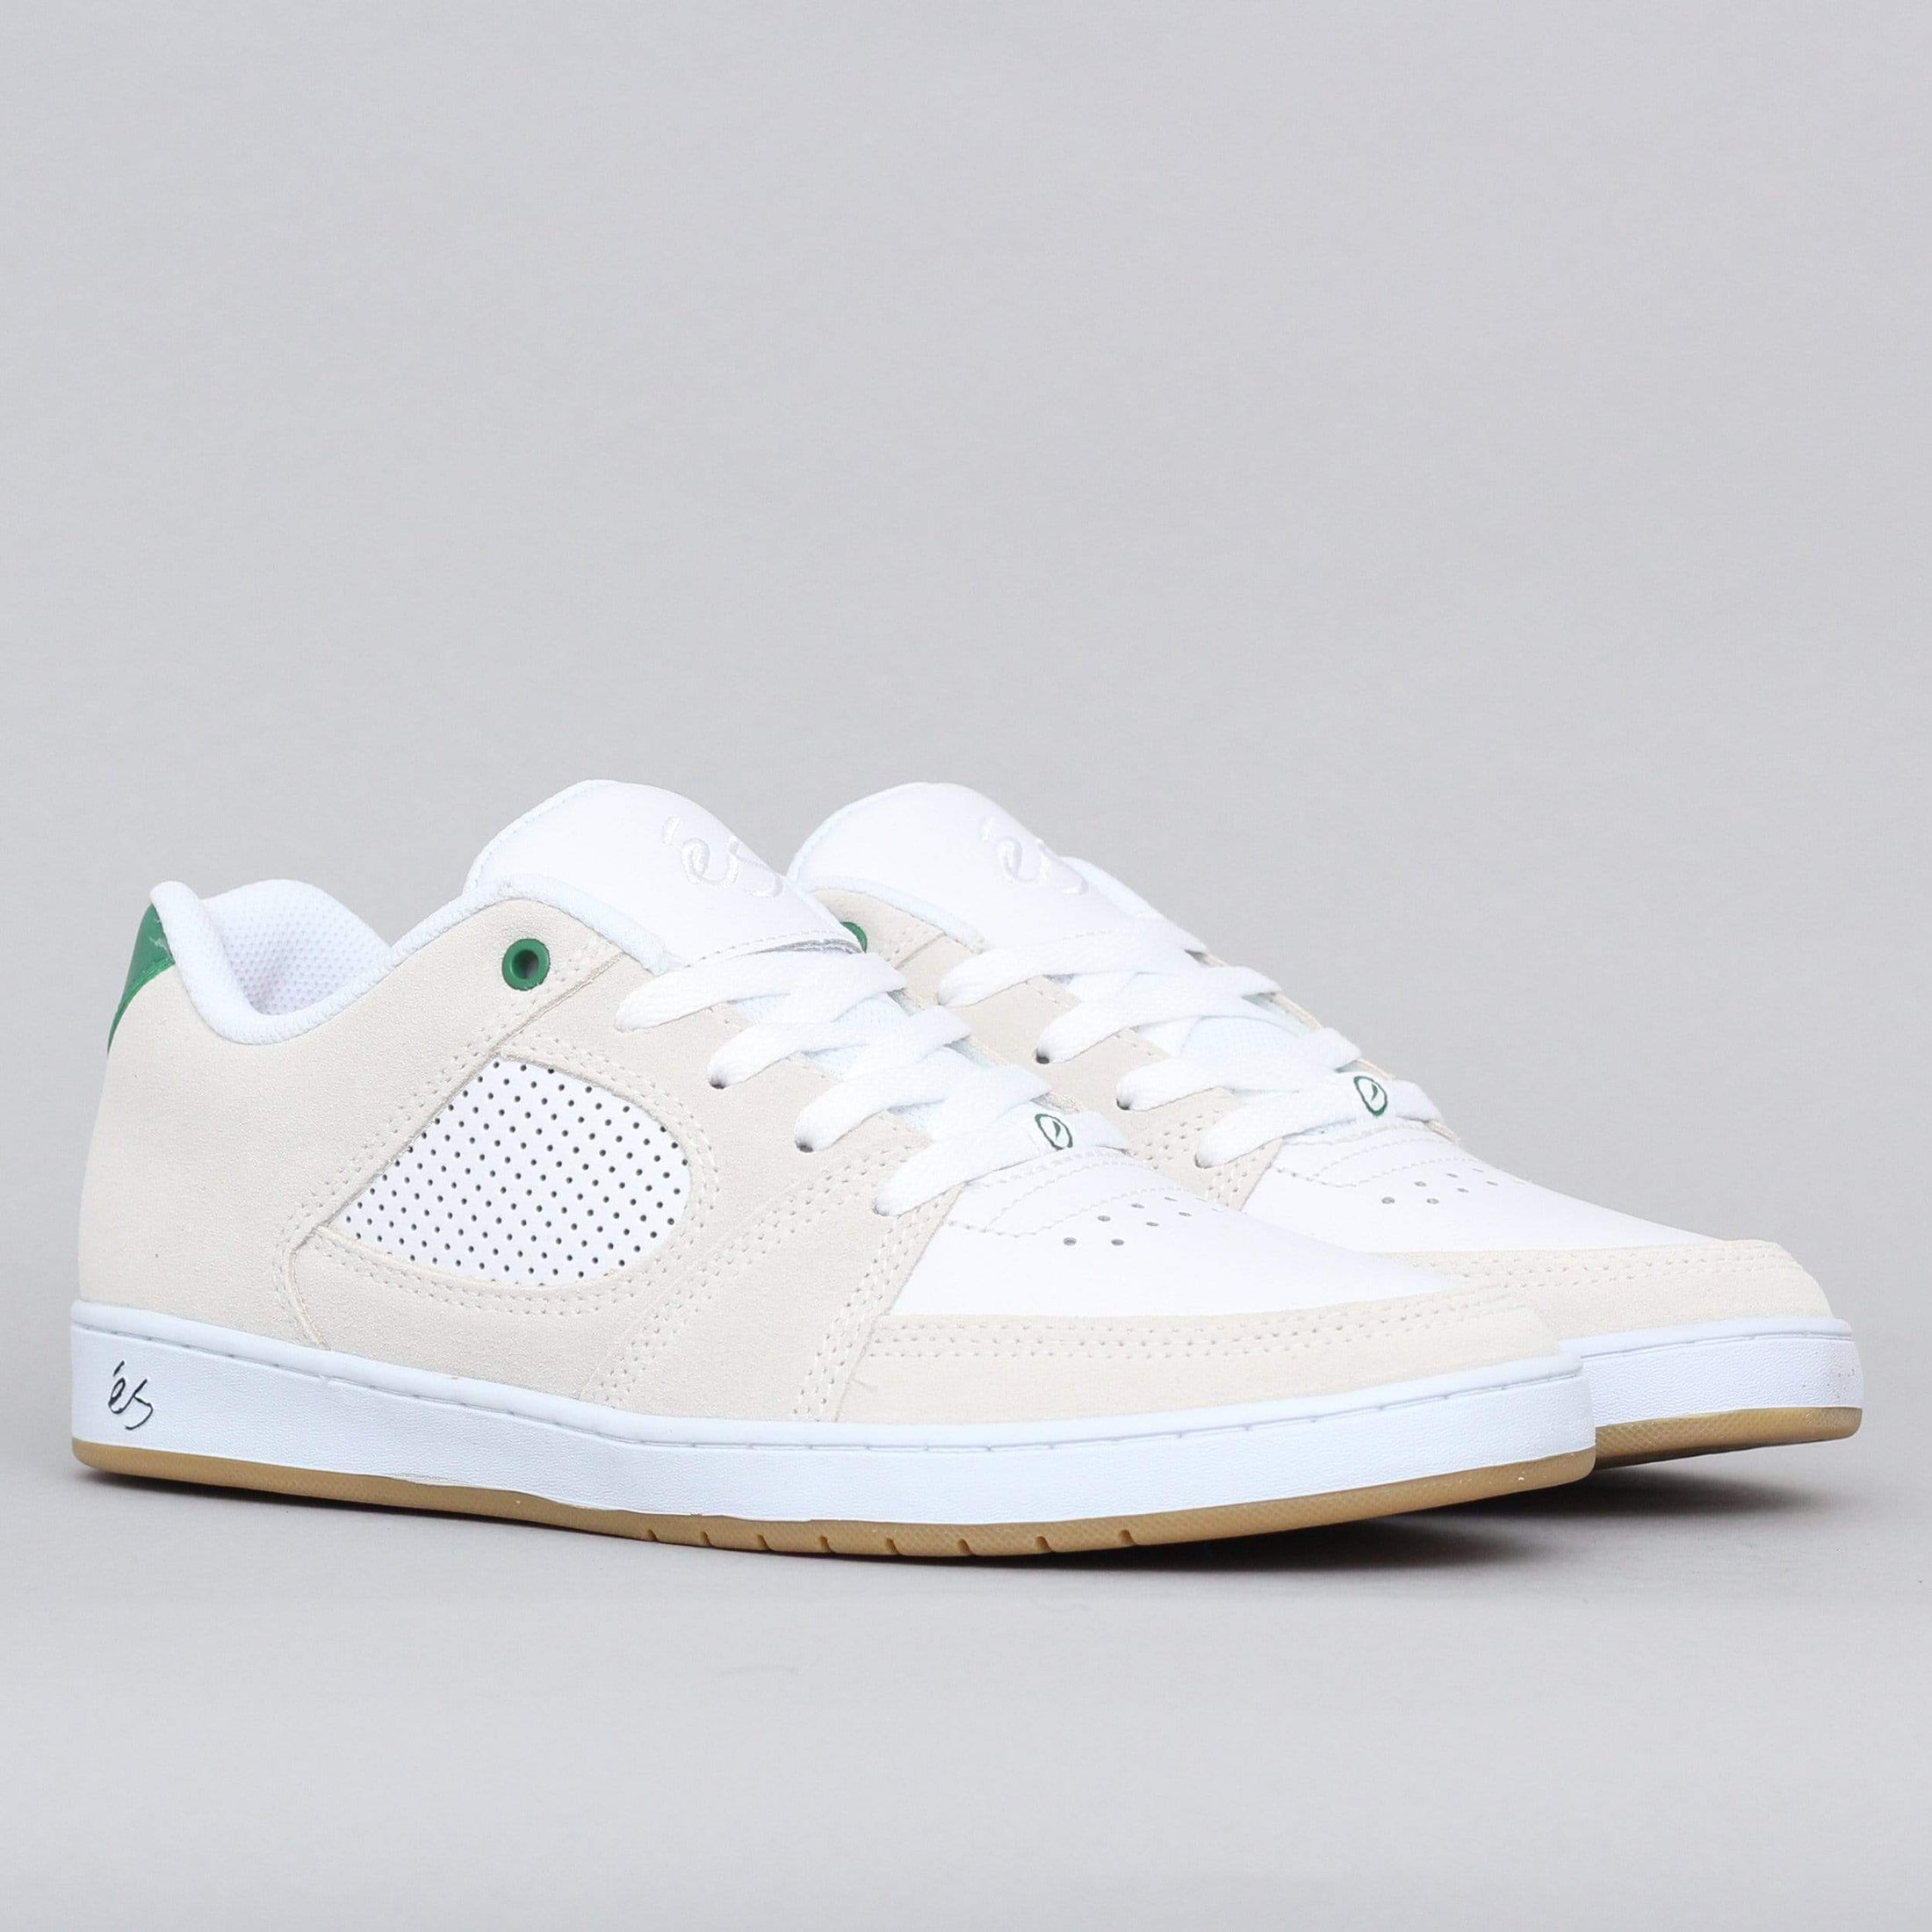 eS Accel Slim Shoes White / Green